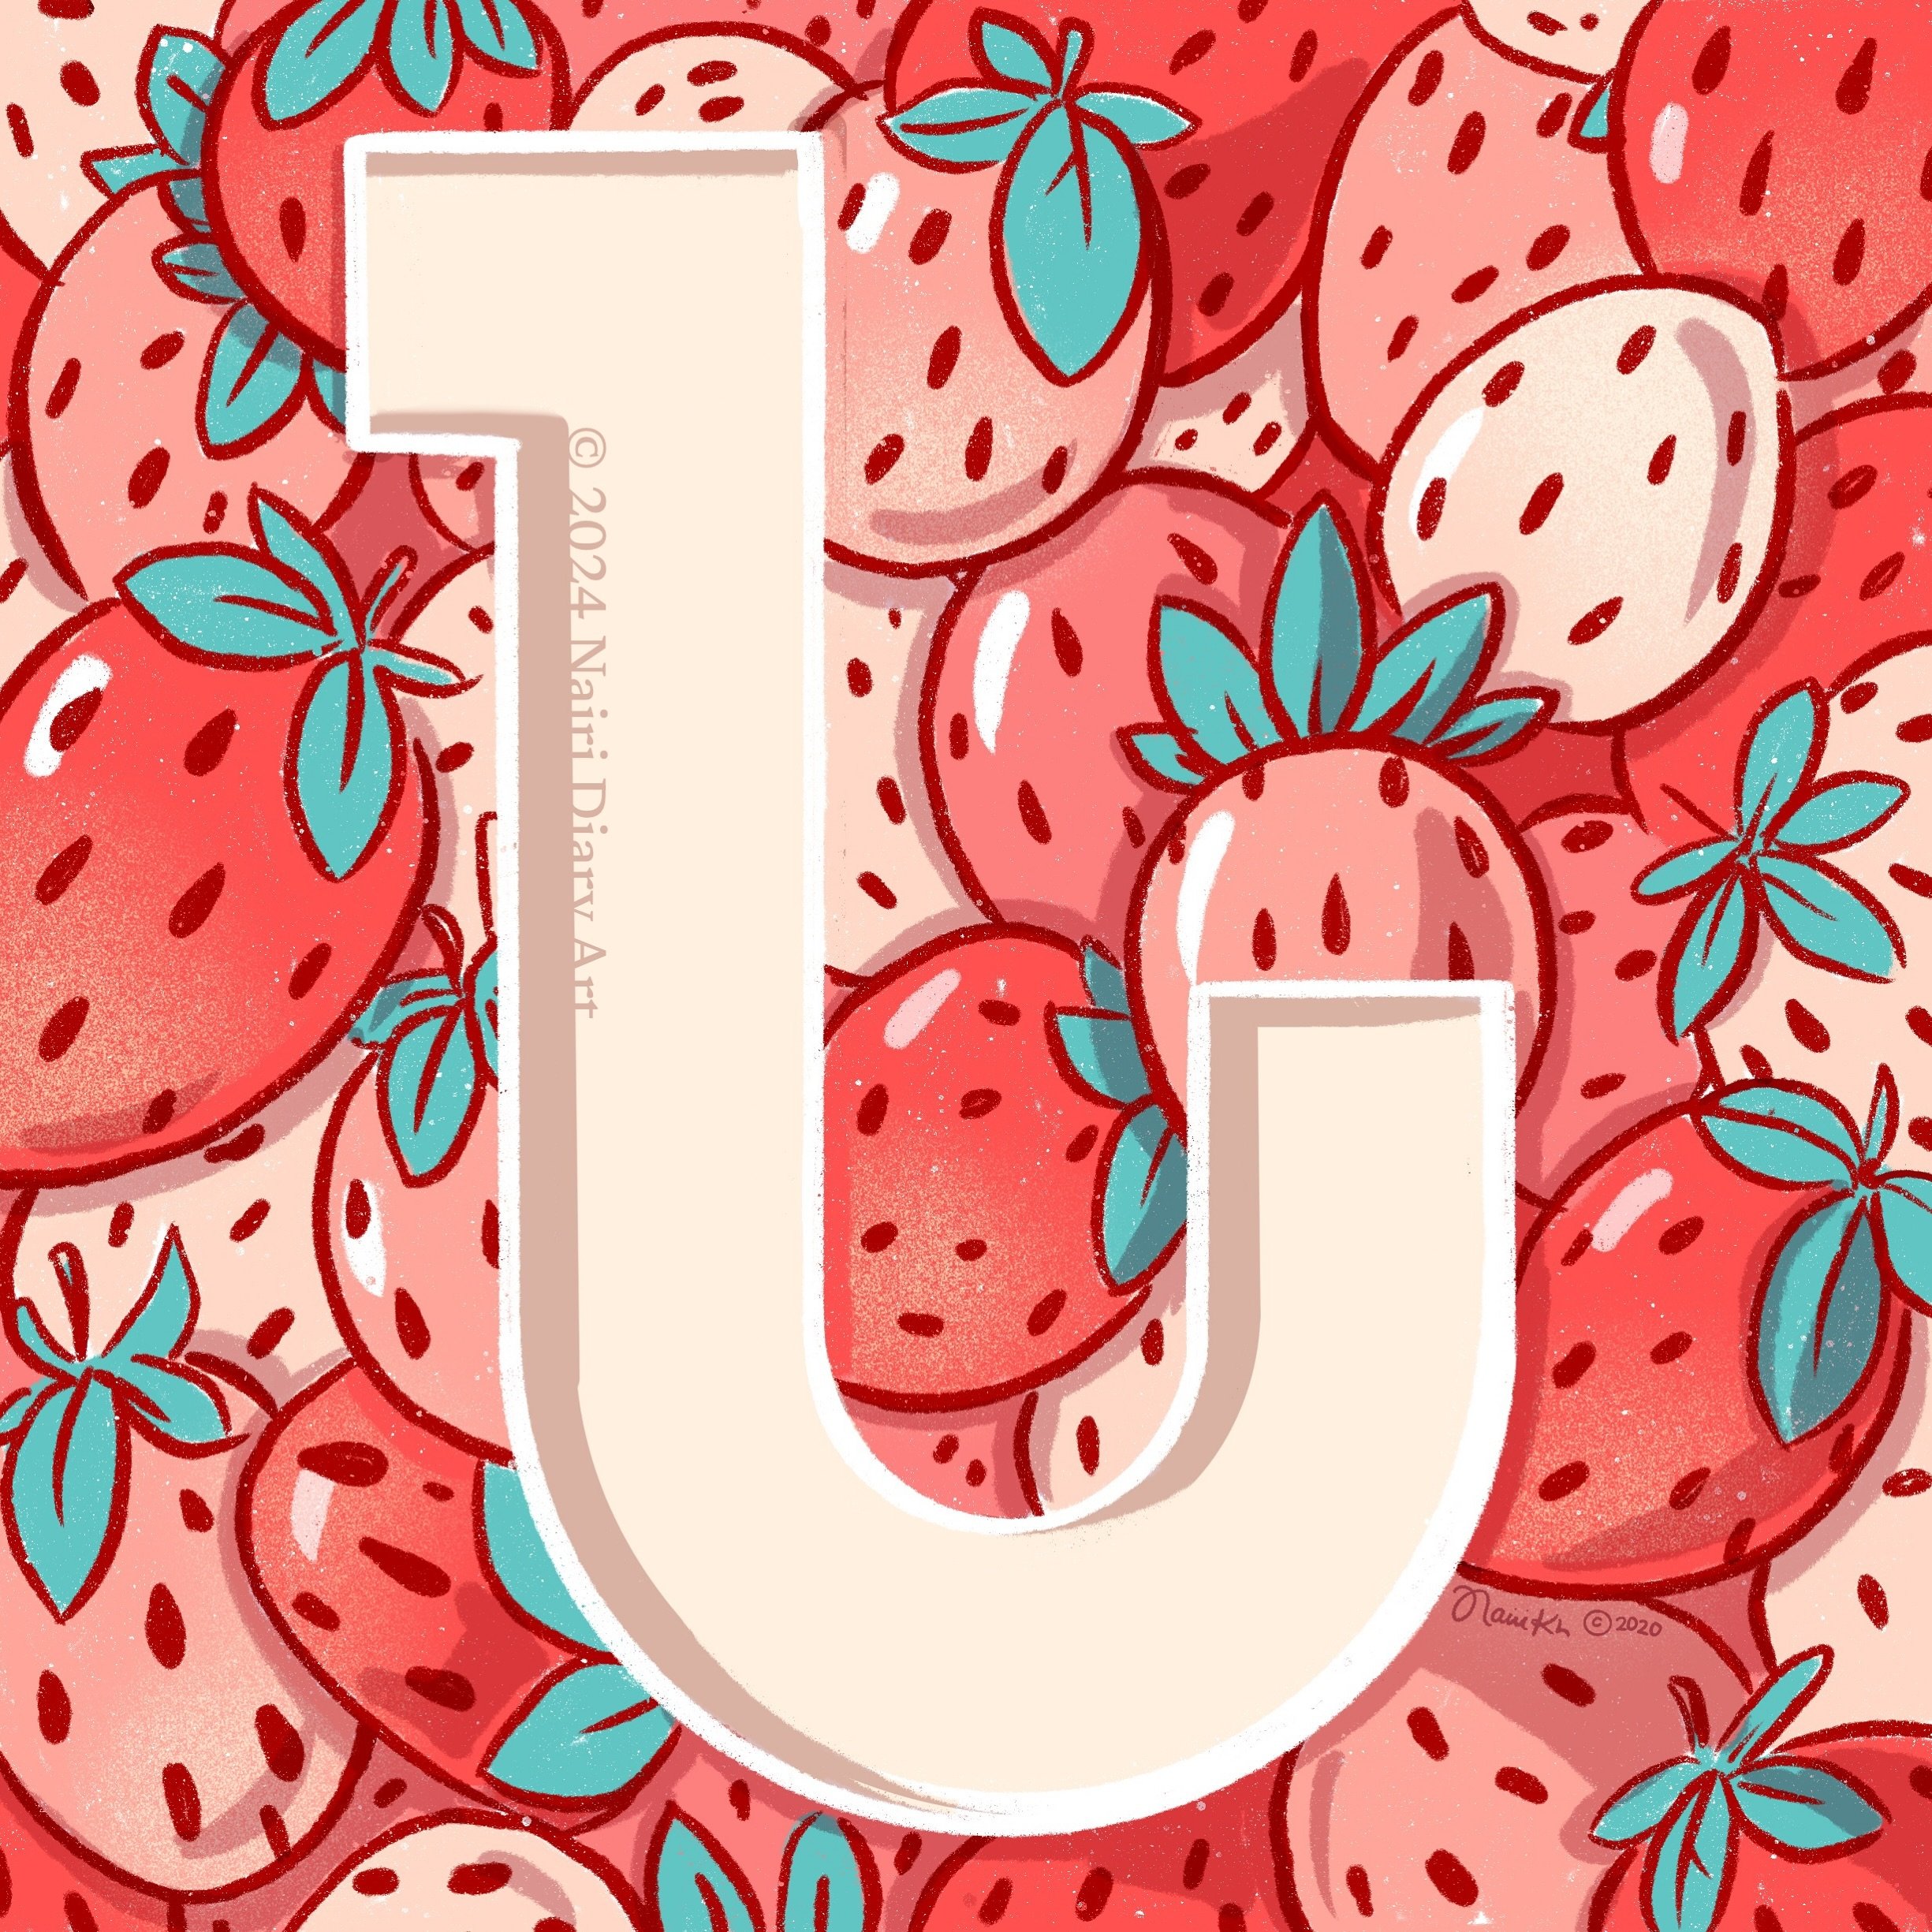 🍓🍓🍓 🇦🇲 Strawberry season is here! Featuring the Armenian letter N (Ն). 🇦🇲
#armenianalphabet #strawberryseason #armenian #armenianheritagemonth #strawberries